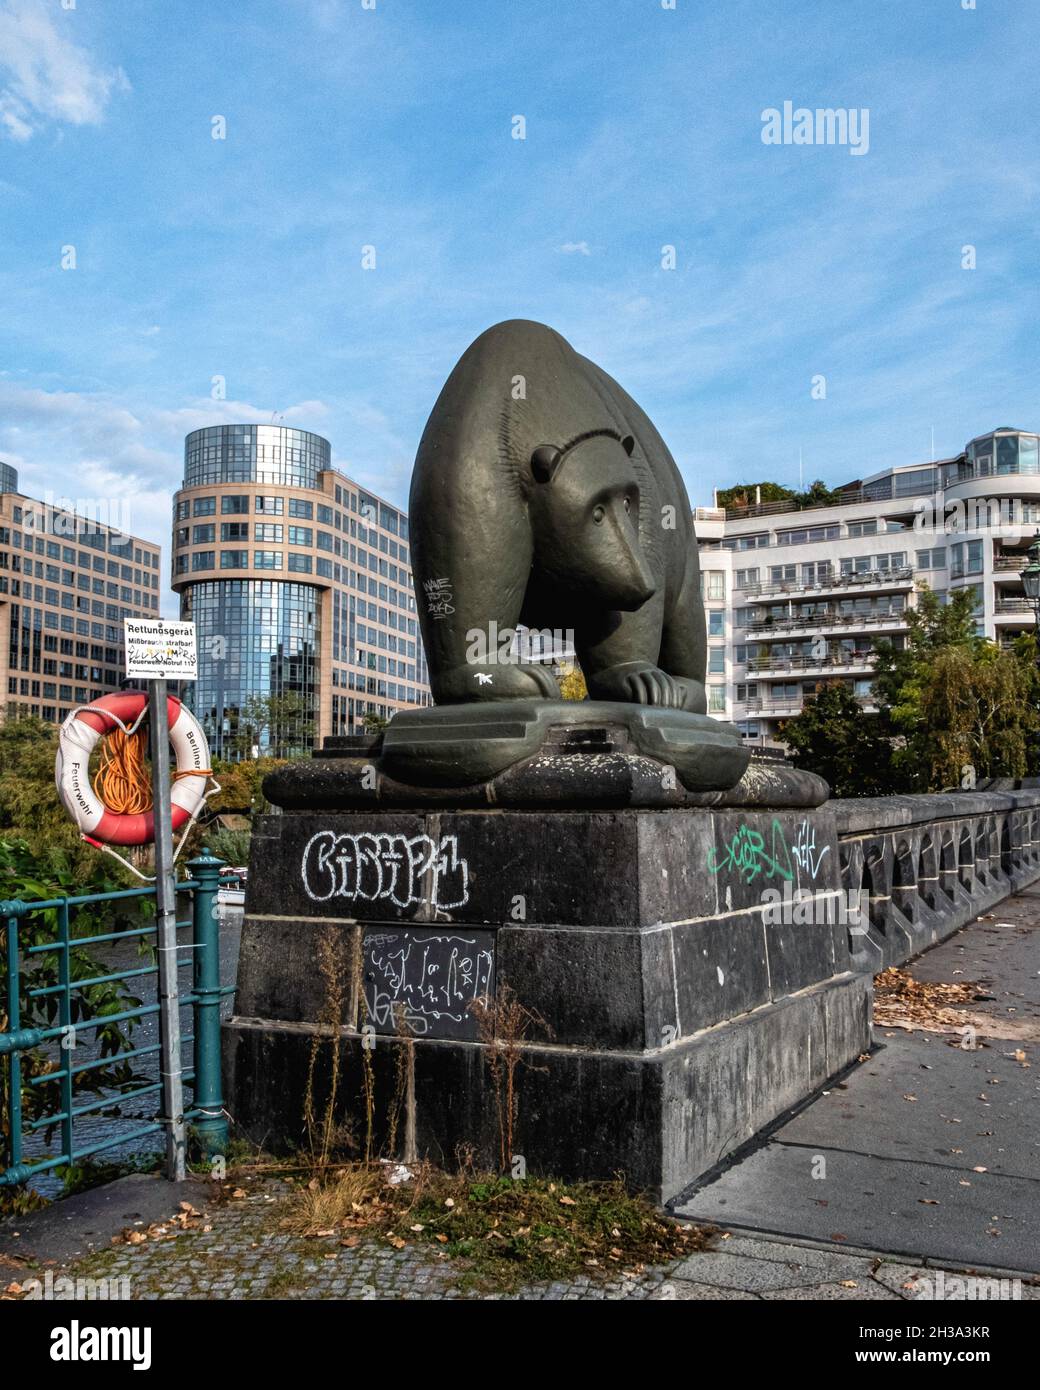 Berlin-Tiergarten,Mitte.Bear sculpture on Moabiter Brücke.Moabit bridge over Spree river and modern office buildings Stock Photo